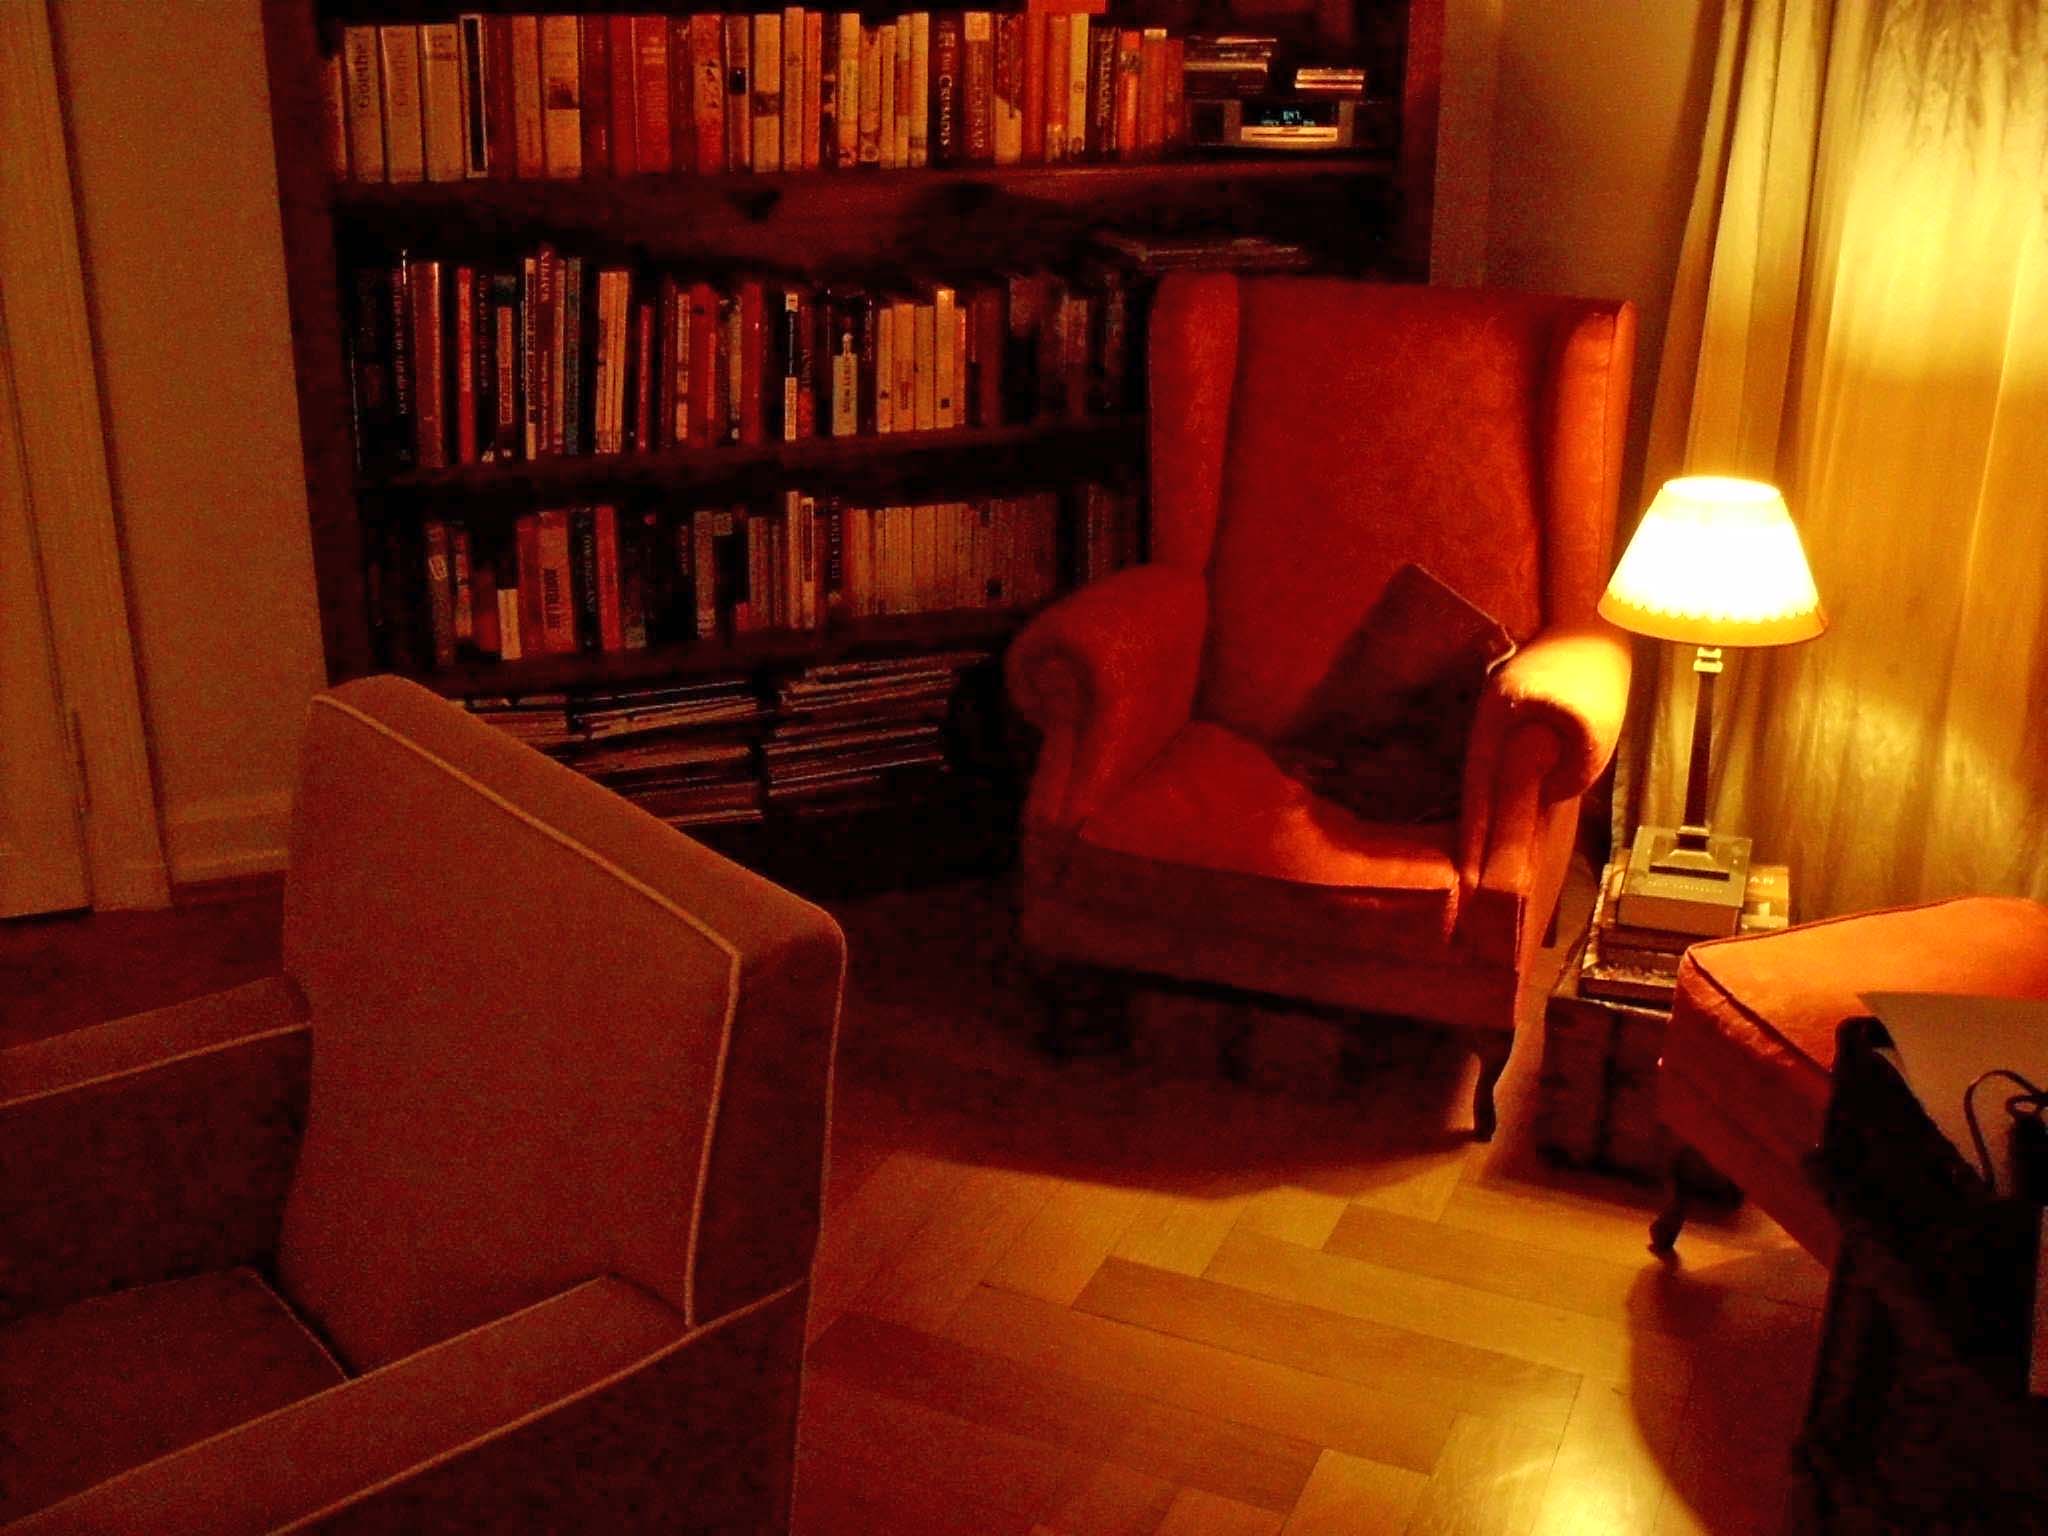 a chair sitting under a book shelf next to a lamp